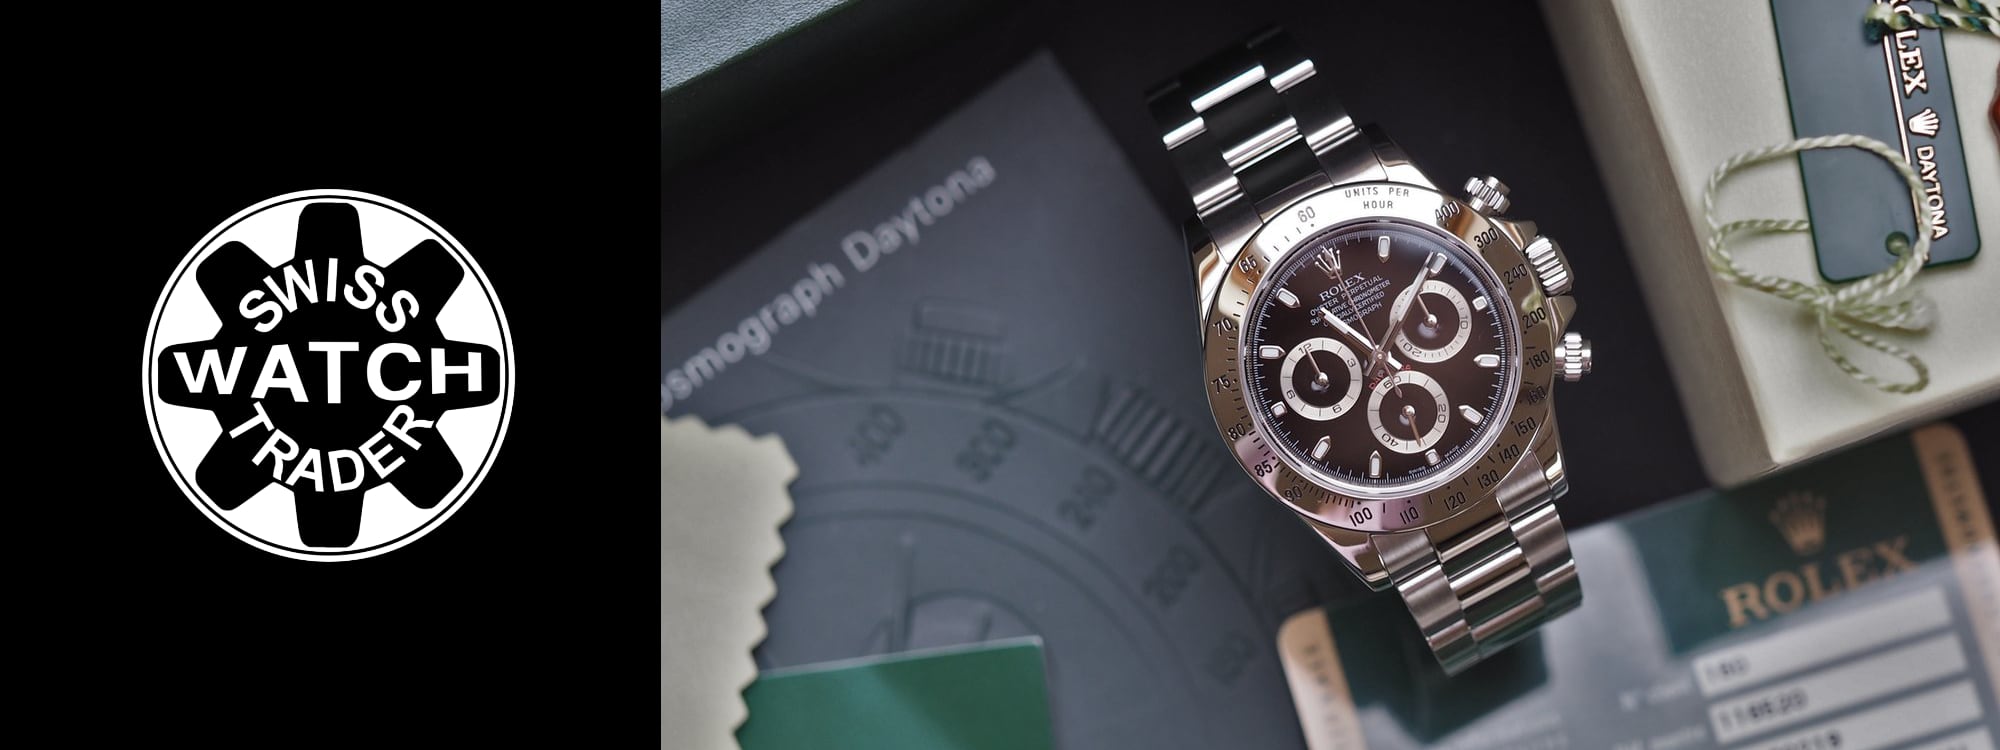 Rolex Daytona Watches For Sale